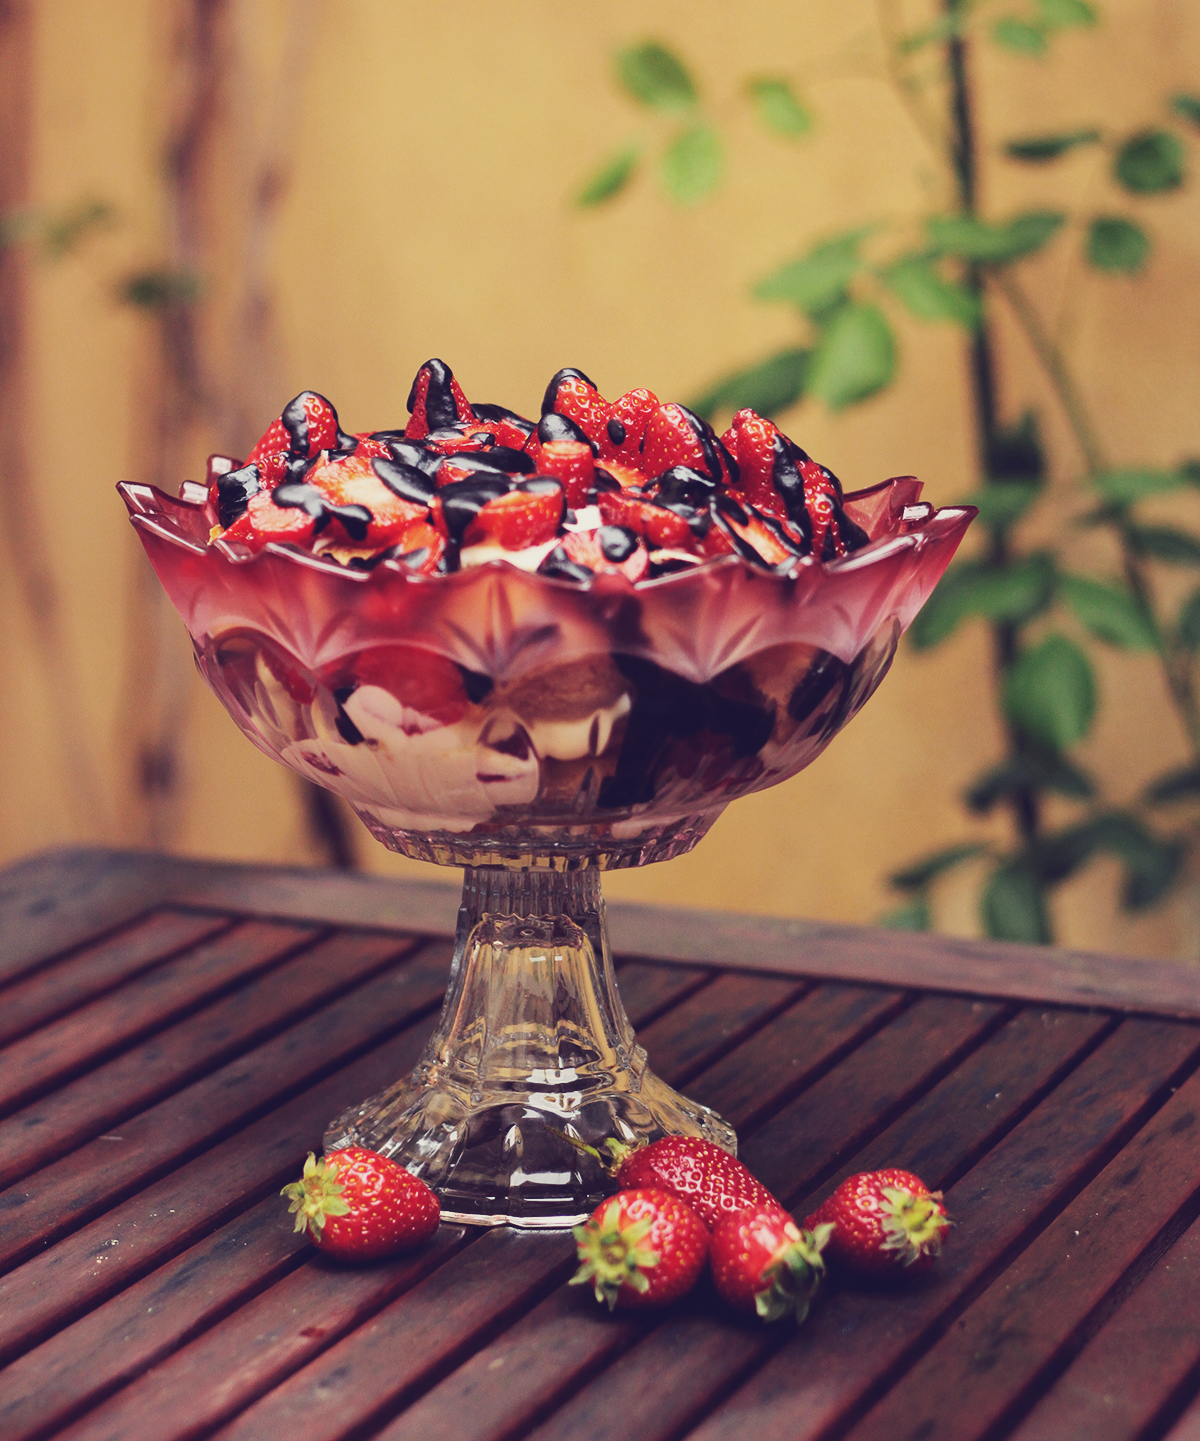 super easy mascarpone cream and strawberries dessert